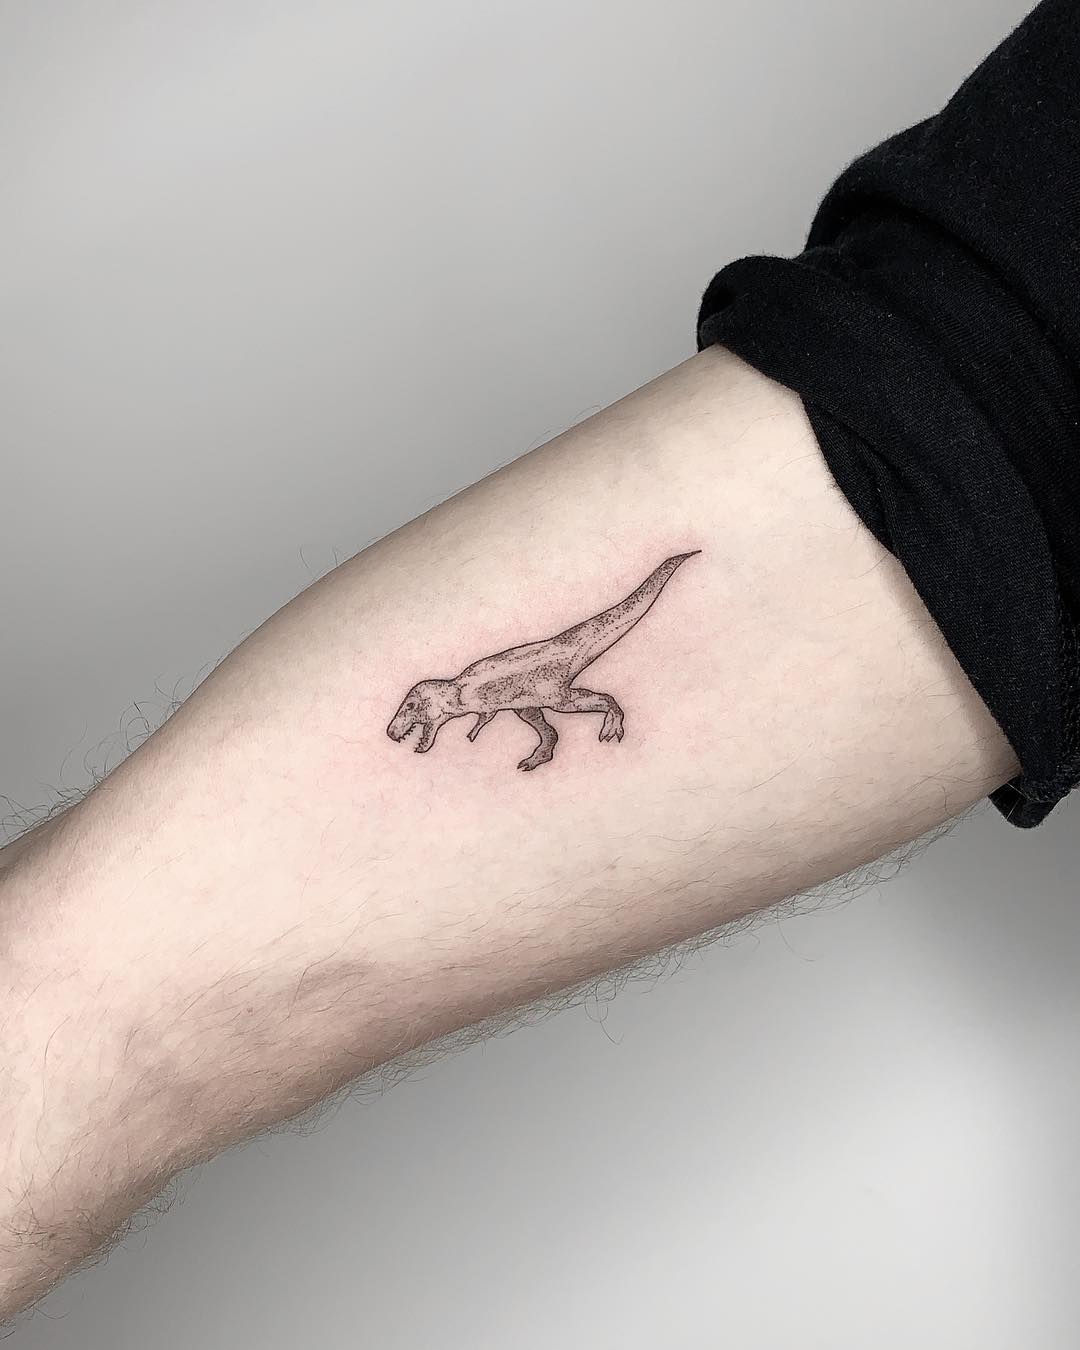 Dinosaur tattoo by Conz Thomas